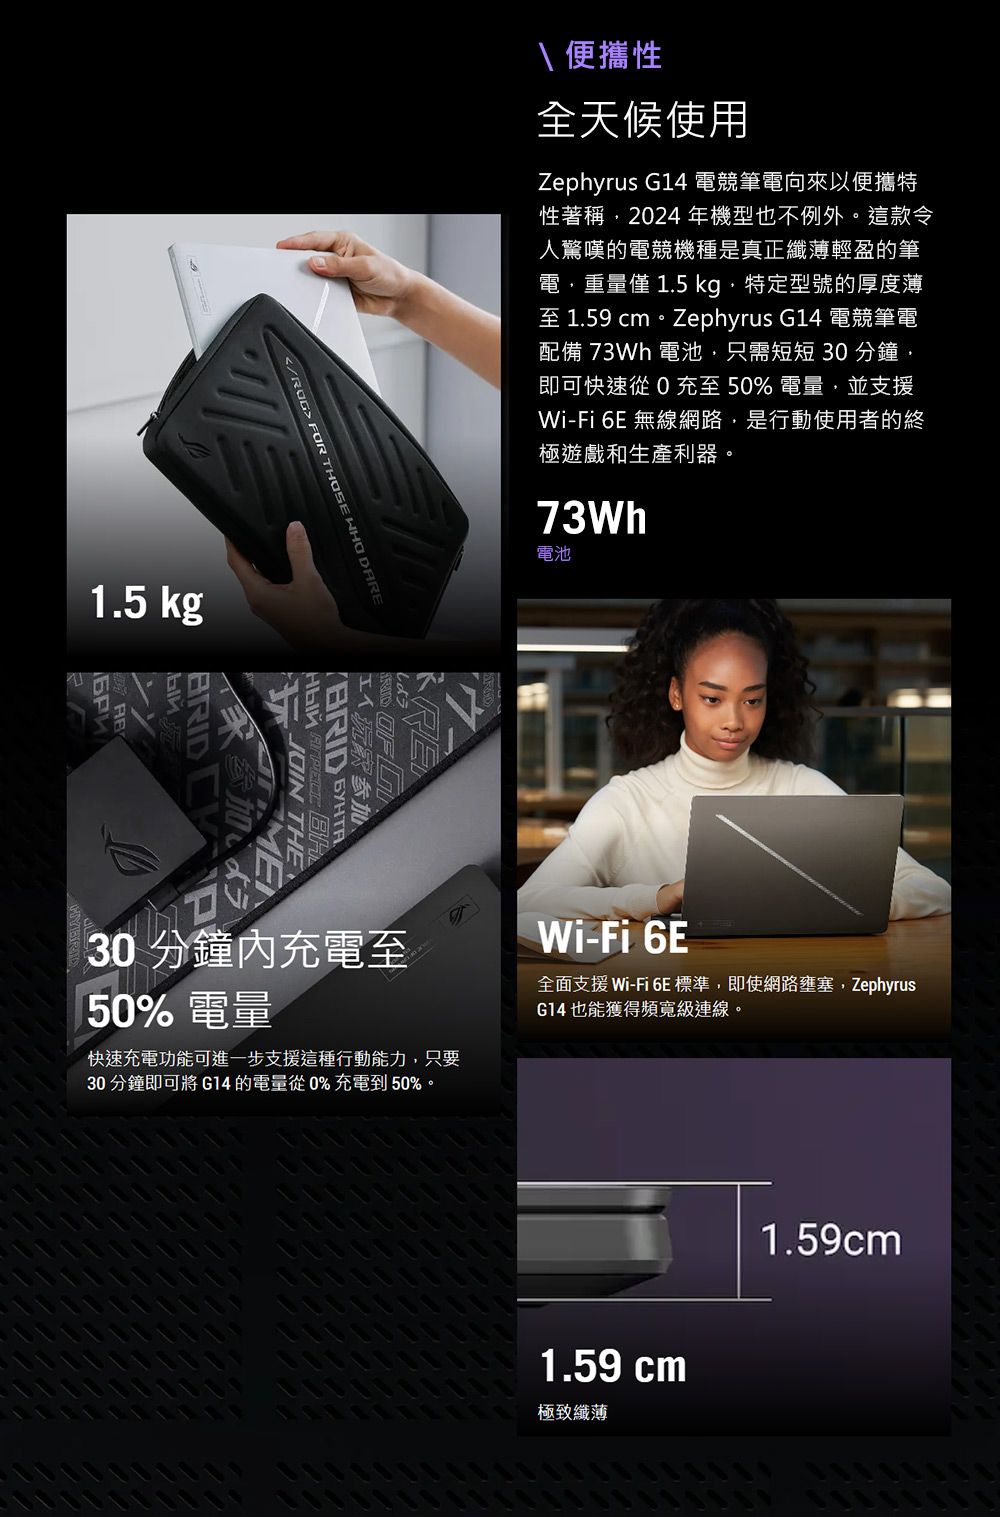 1.5 kg 便攜性全天候使用Zephyrus G14 電競筆電向來以便攜特性著稱2024年機型也不例外。這款令人驚嘆的電競機種是真正纖薄輕盈的筆電重量 1.5 kg特定型號的厚度薄至 1.59 。Zephyrus G14 電競筆電配備 73Wh 電池只需短短30 分鐘即可快速從0充至 50% 電量並支援Wi-Fi 6E 無線網路,是行動使用者的終極遊戲和生產利器。73Wh電池 FOR THOSE WHO DAREREB 工人参加RID OF НBRID ЫЙ30 分鐘內充電至50% 電量快速充電功能可進一步支援這種行動能力,只要30 分鐘即可將 G14的電量從0%充電到50%。Wi-Fi 6E全面支援 Wi-Fi 6E標準,即使網路壅塞,ZephyrusG14 也能獲得頻寬級連線。1.59 cm極致纖薄1.59cm1111